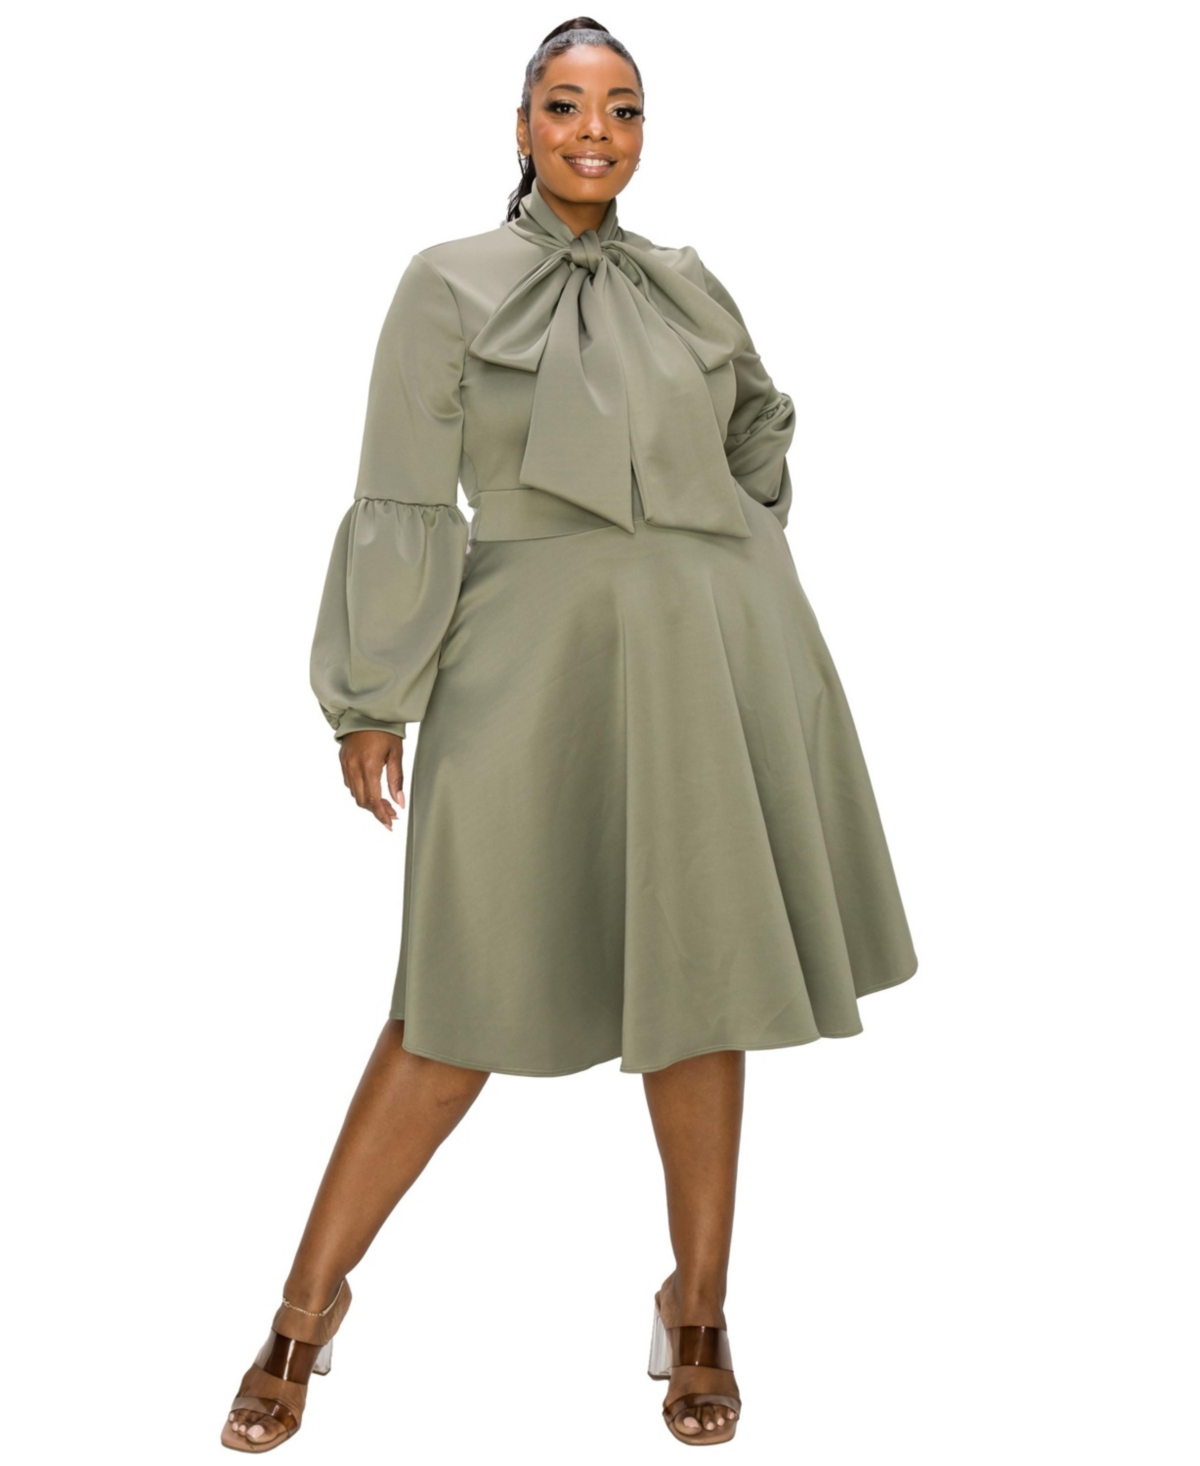 Plus Size Bekah Flare Pocket Dress - Sage